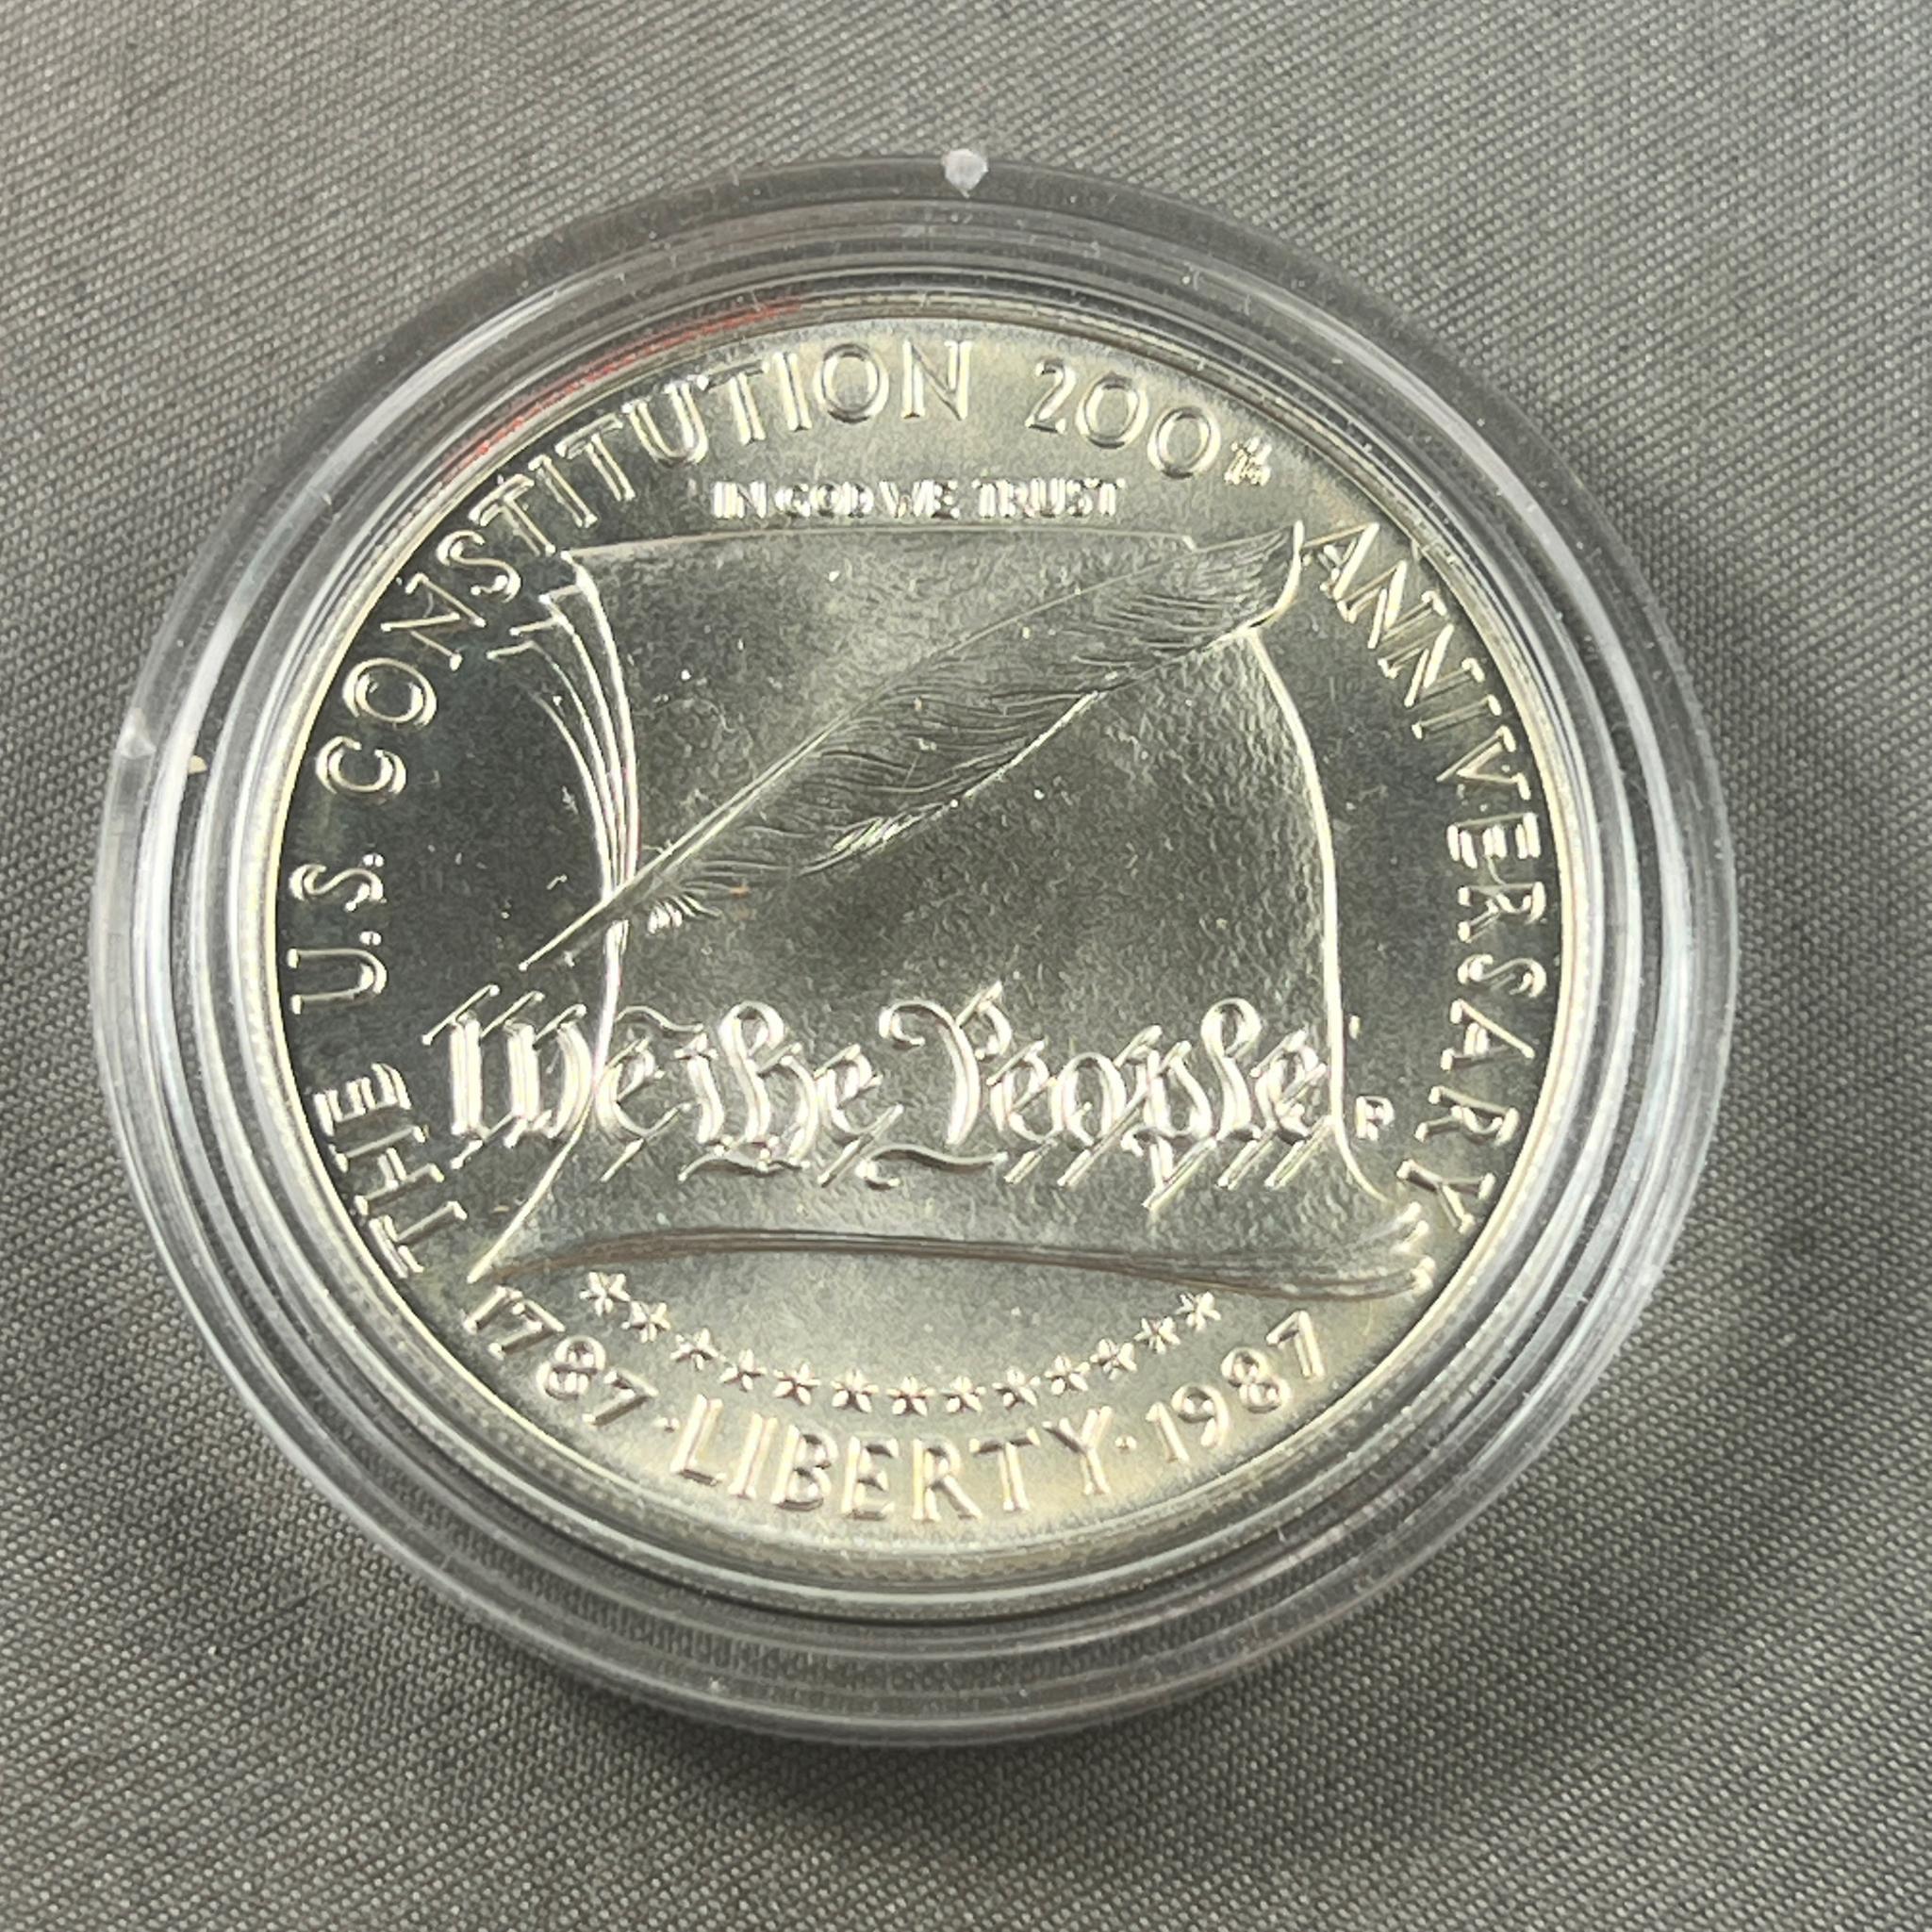 1987 US Constitution Commemorative US Dollar coin, 90% Silver